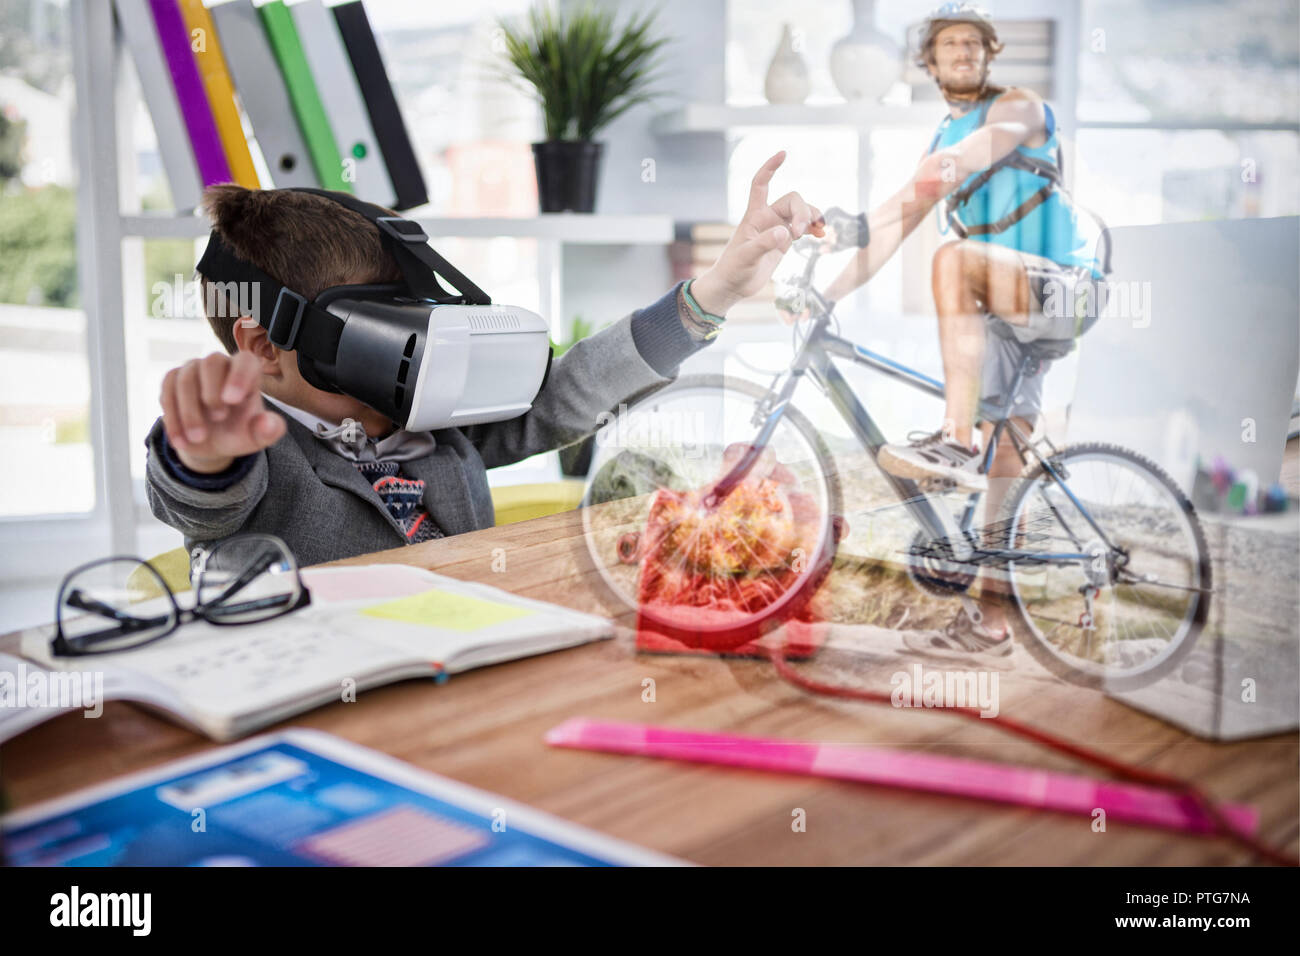 Composite image of boy imitating as business executive using virtual reality headset Stock Photo